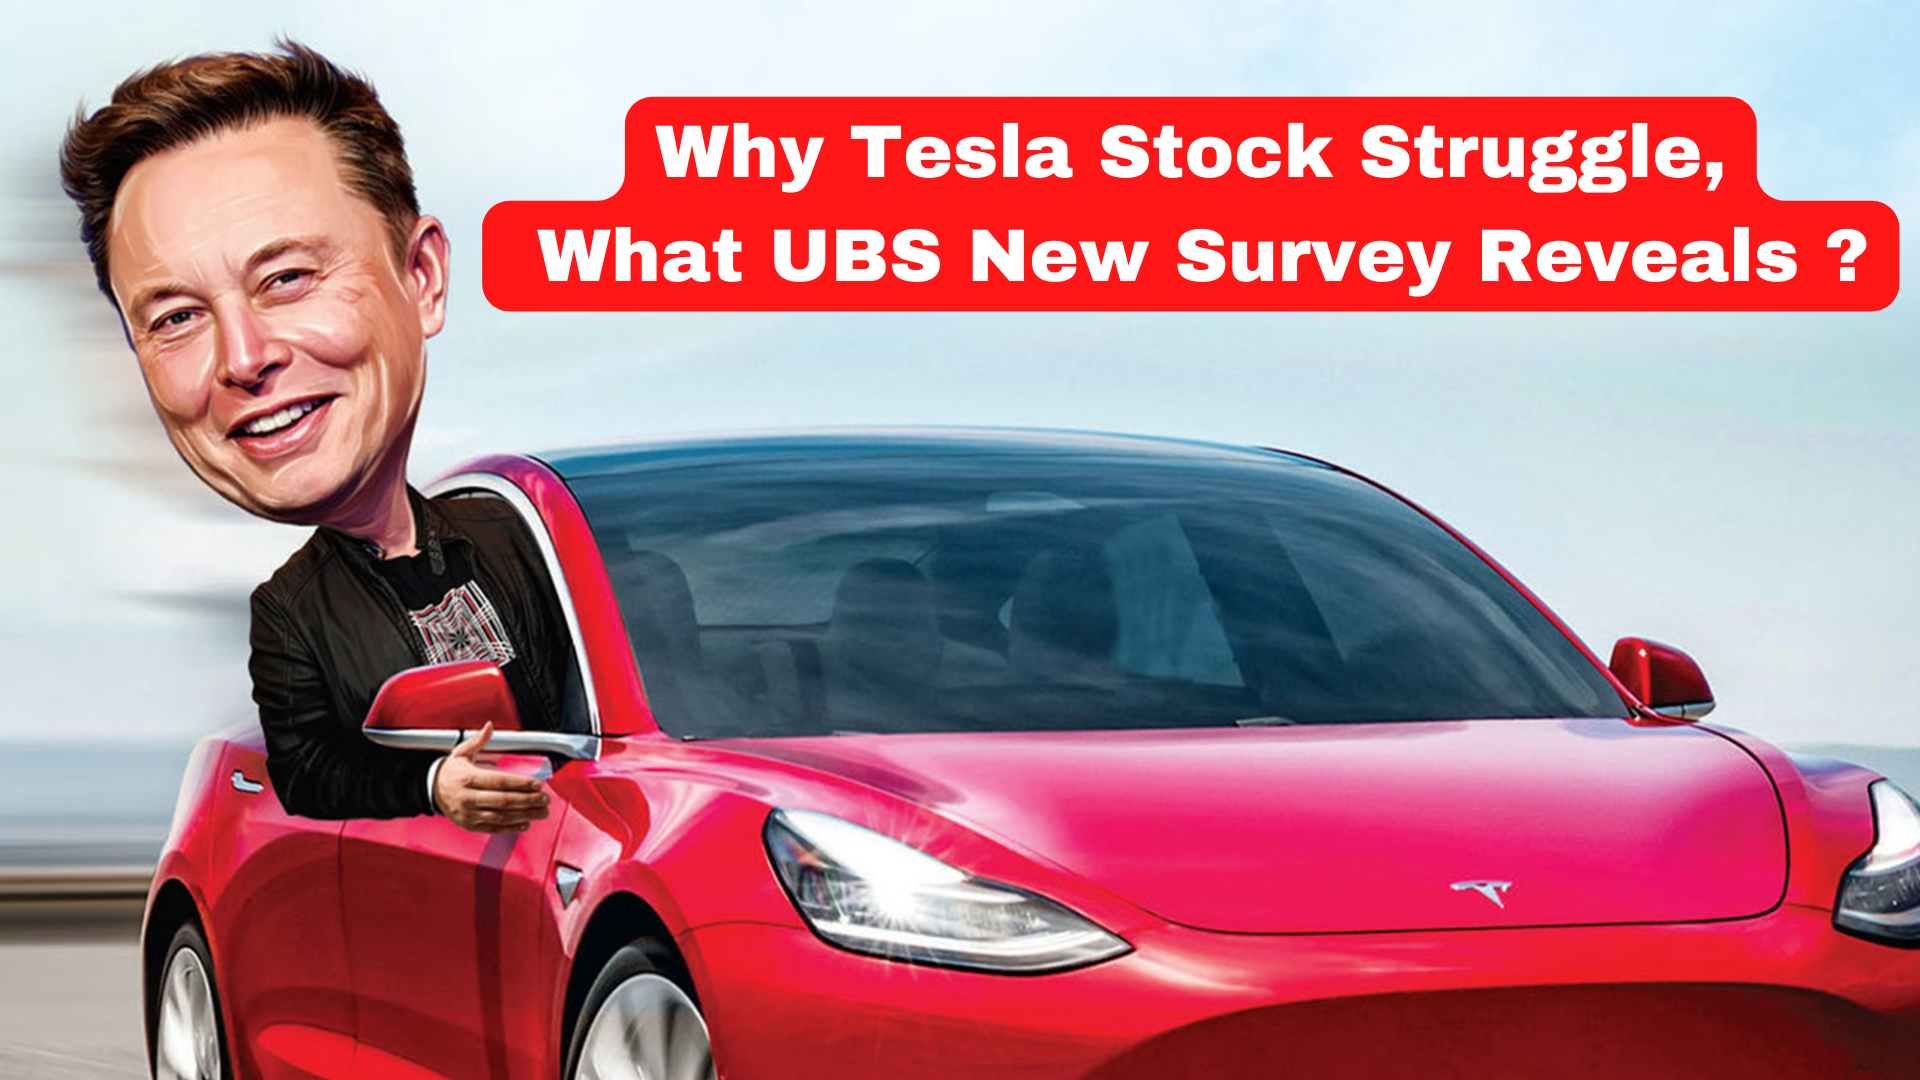 Why Tesla Stock Struggle, What UBS New Survey Reveals?